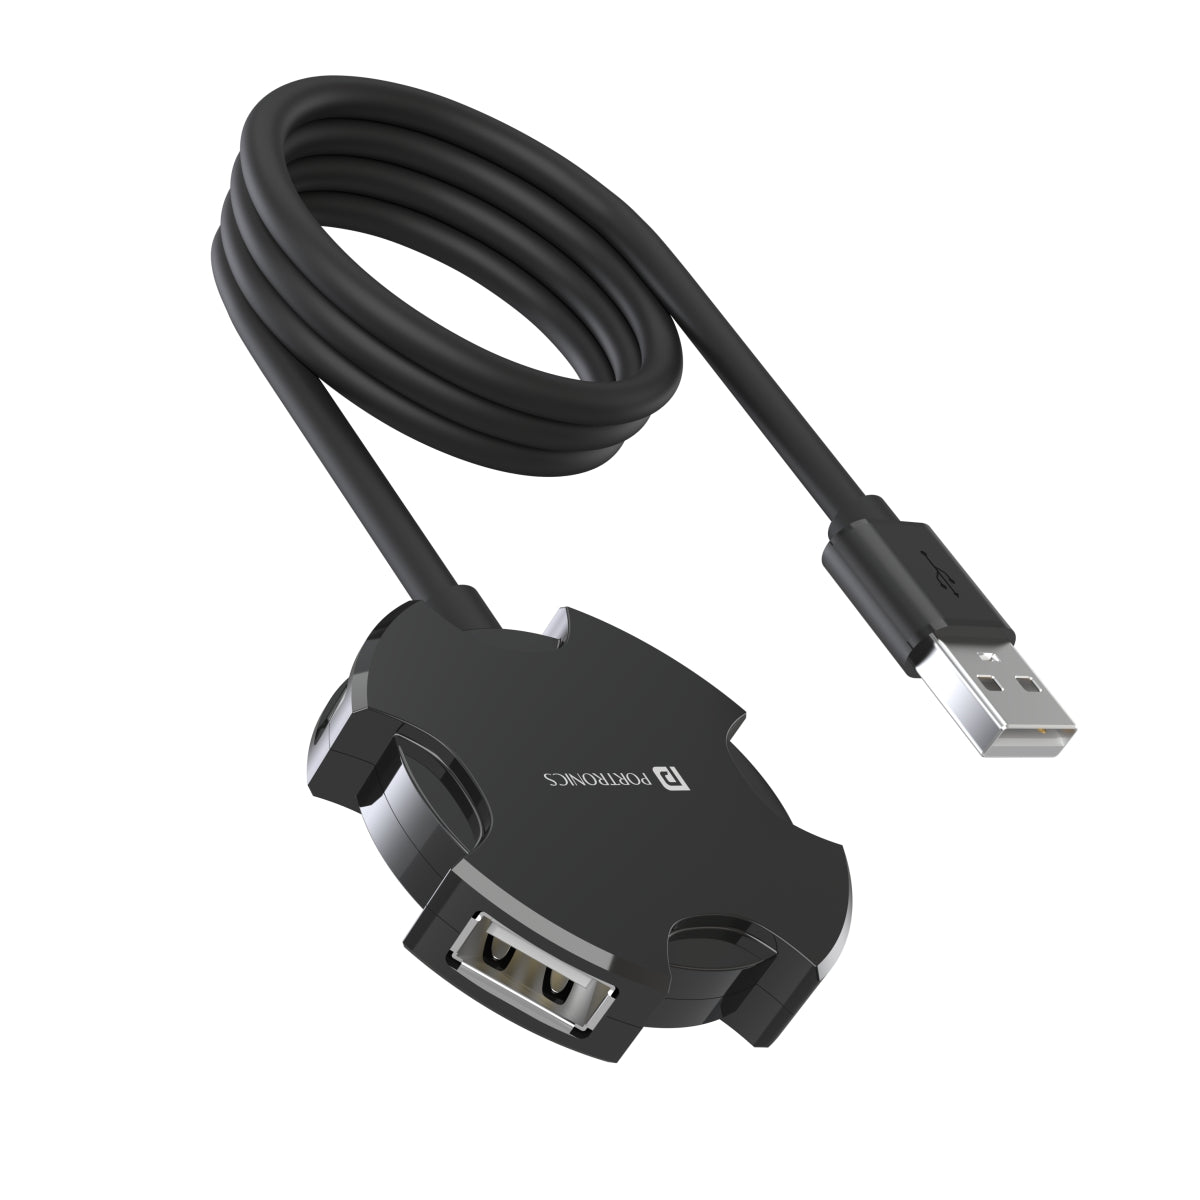 Portronics Mport 4C Portable USB Port Hub. Black